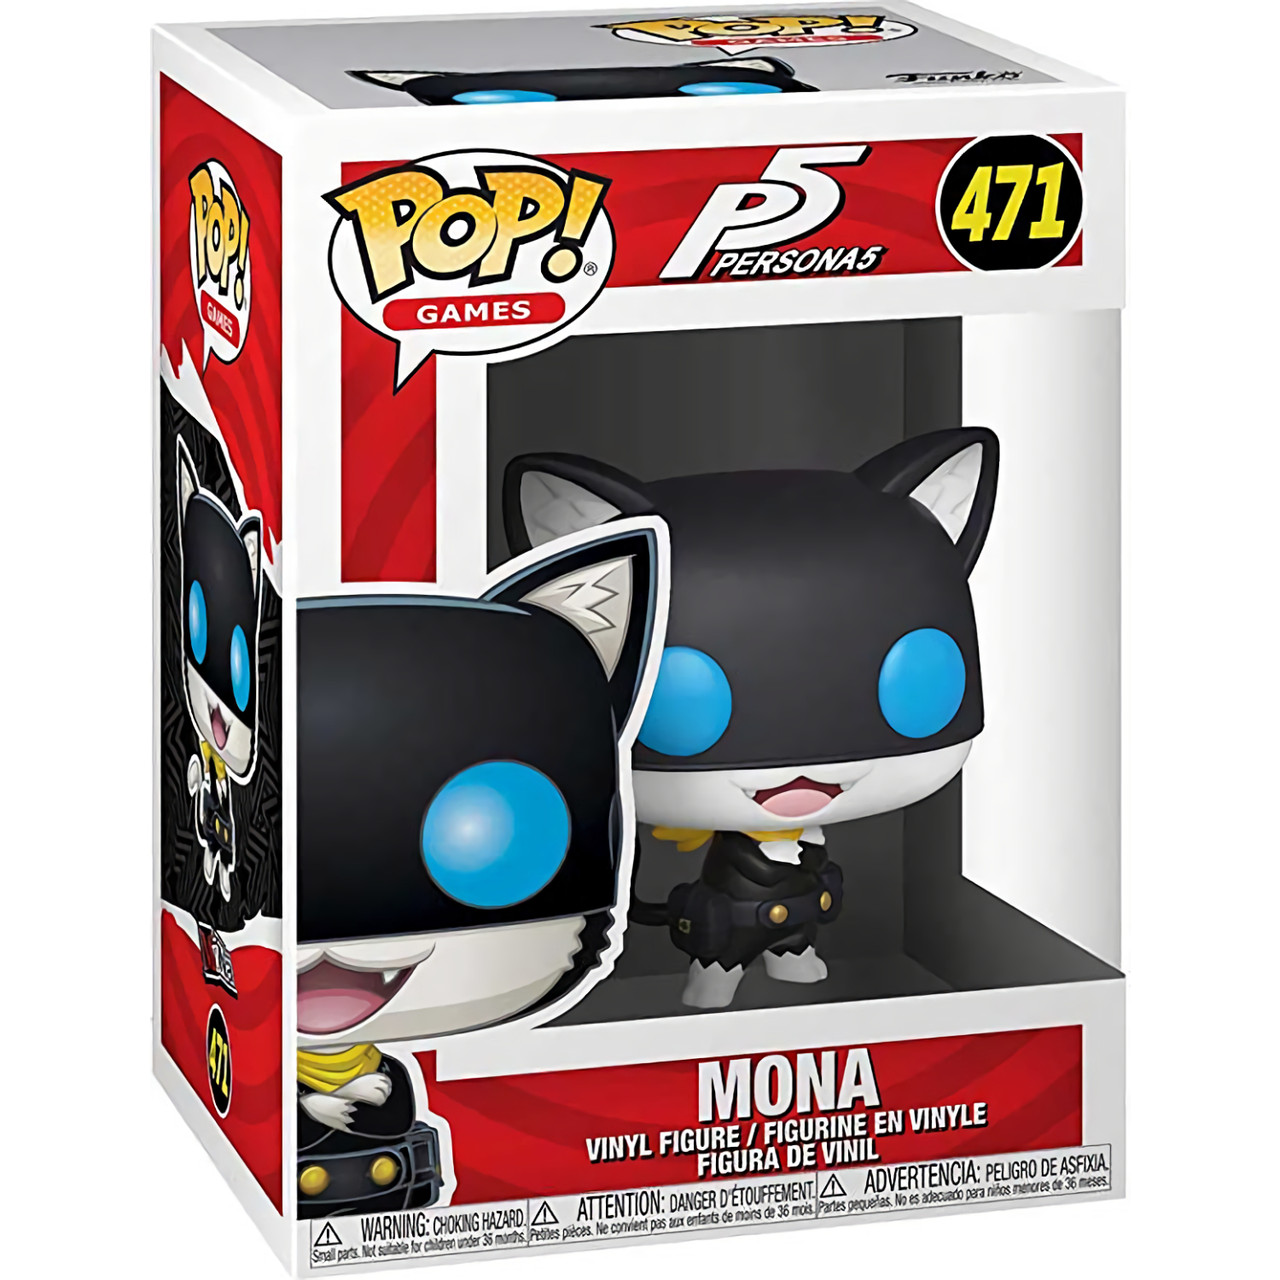 Persona 5 Funko Pop Games Mona Vinyl Figure Item #37405 